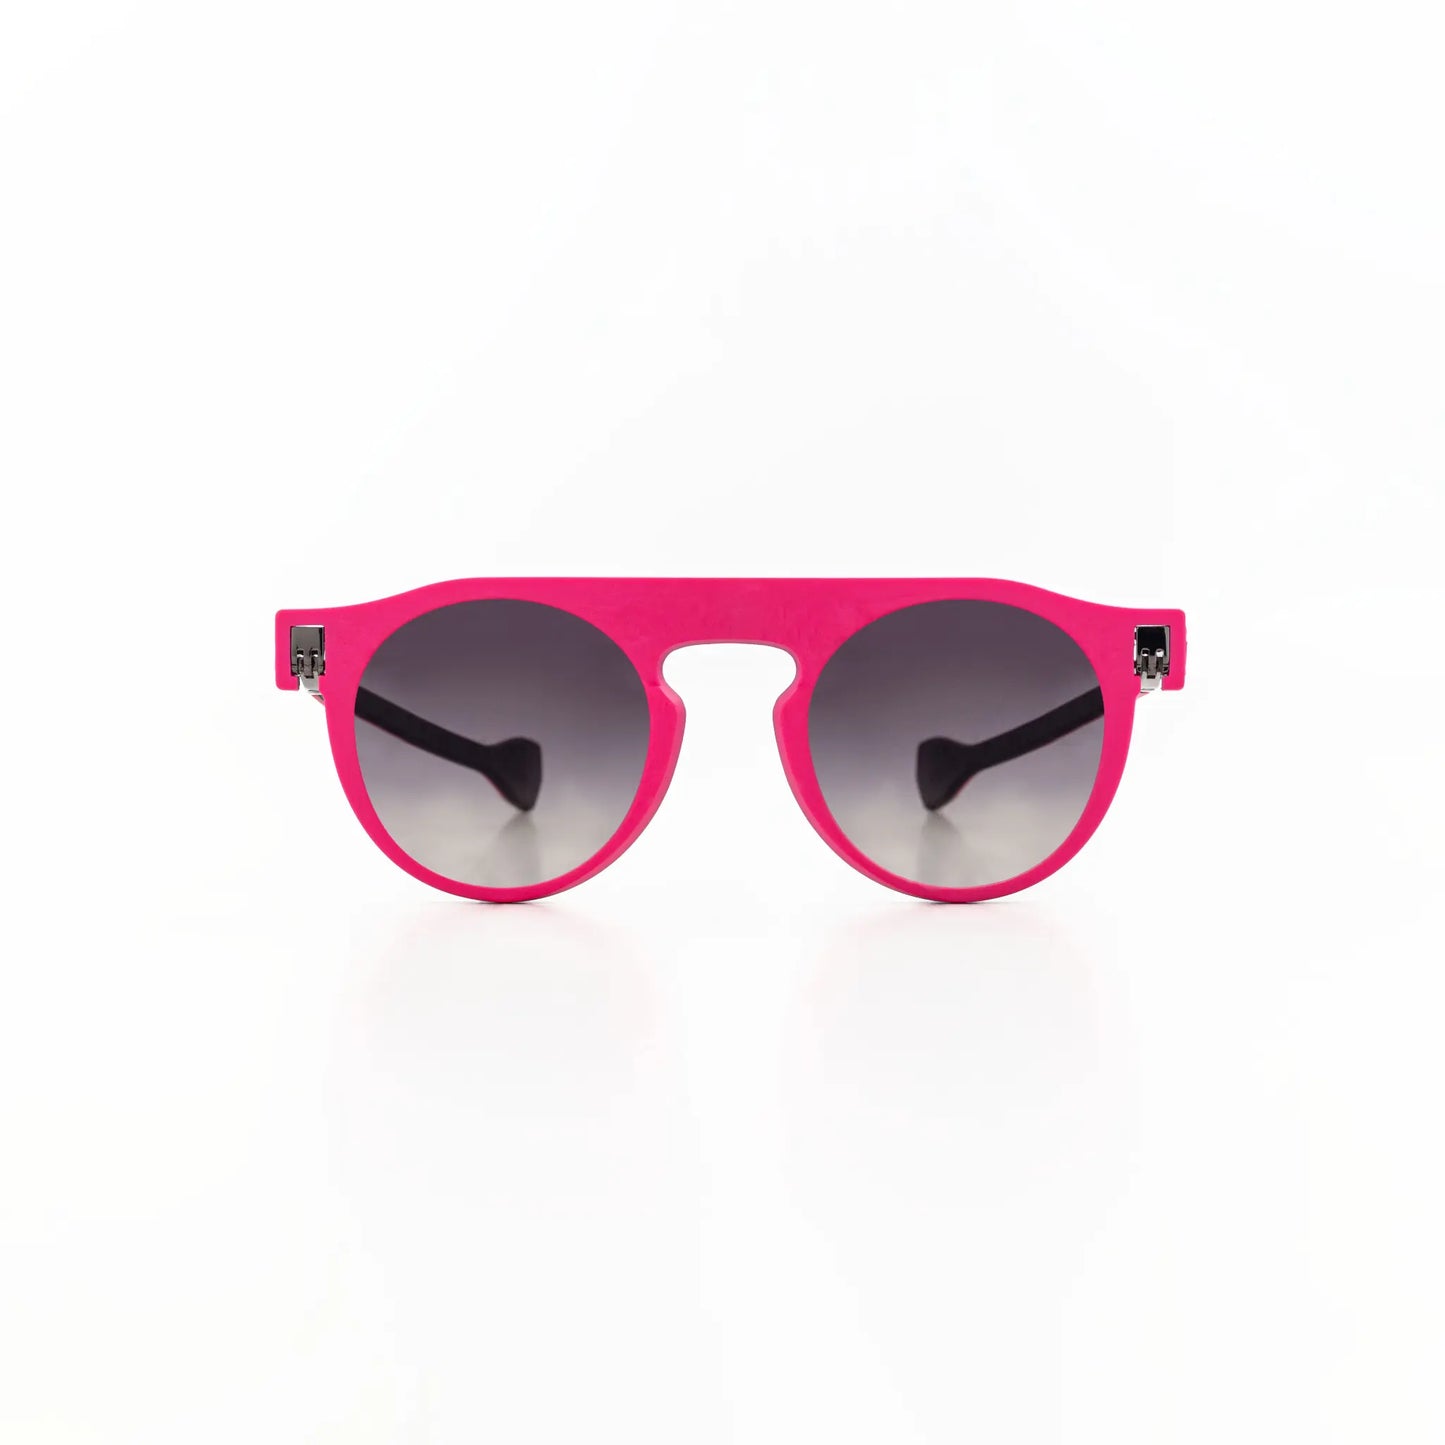 Reverso sunglasses black & pink reversible & ultra light front view 2